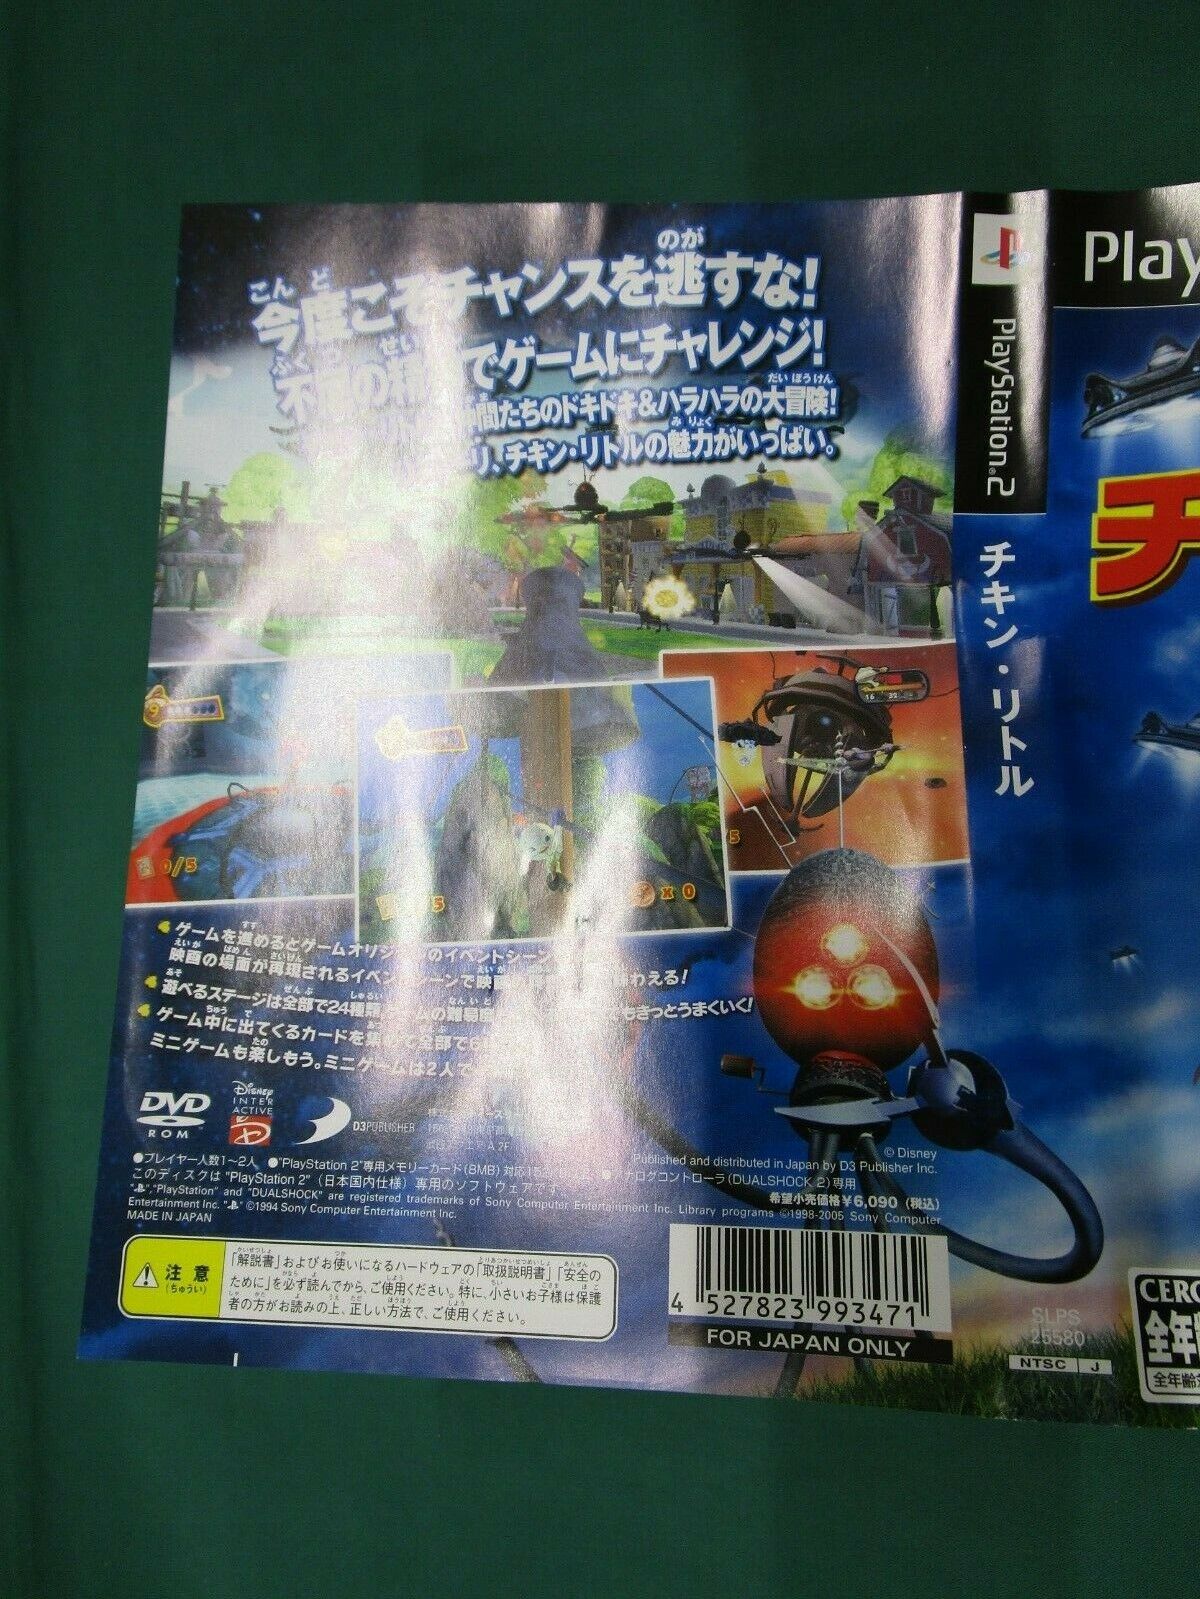 Chicken Little Playstation2 Japan 2005 for sale online | eBay